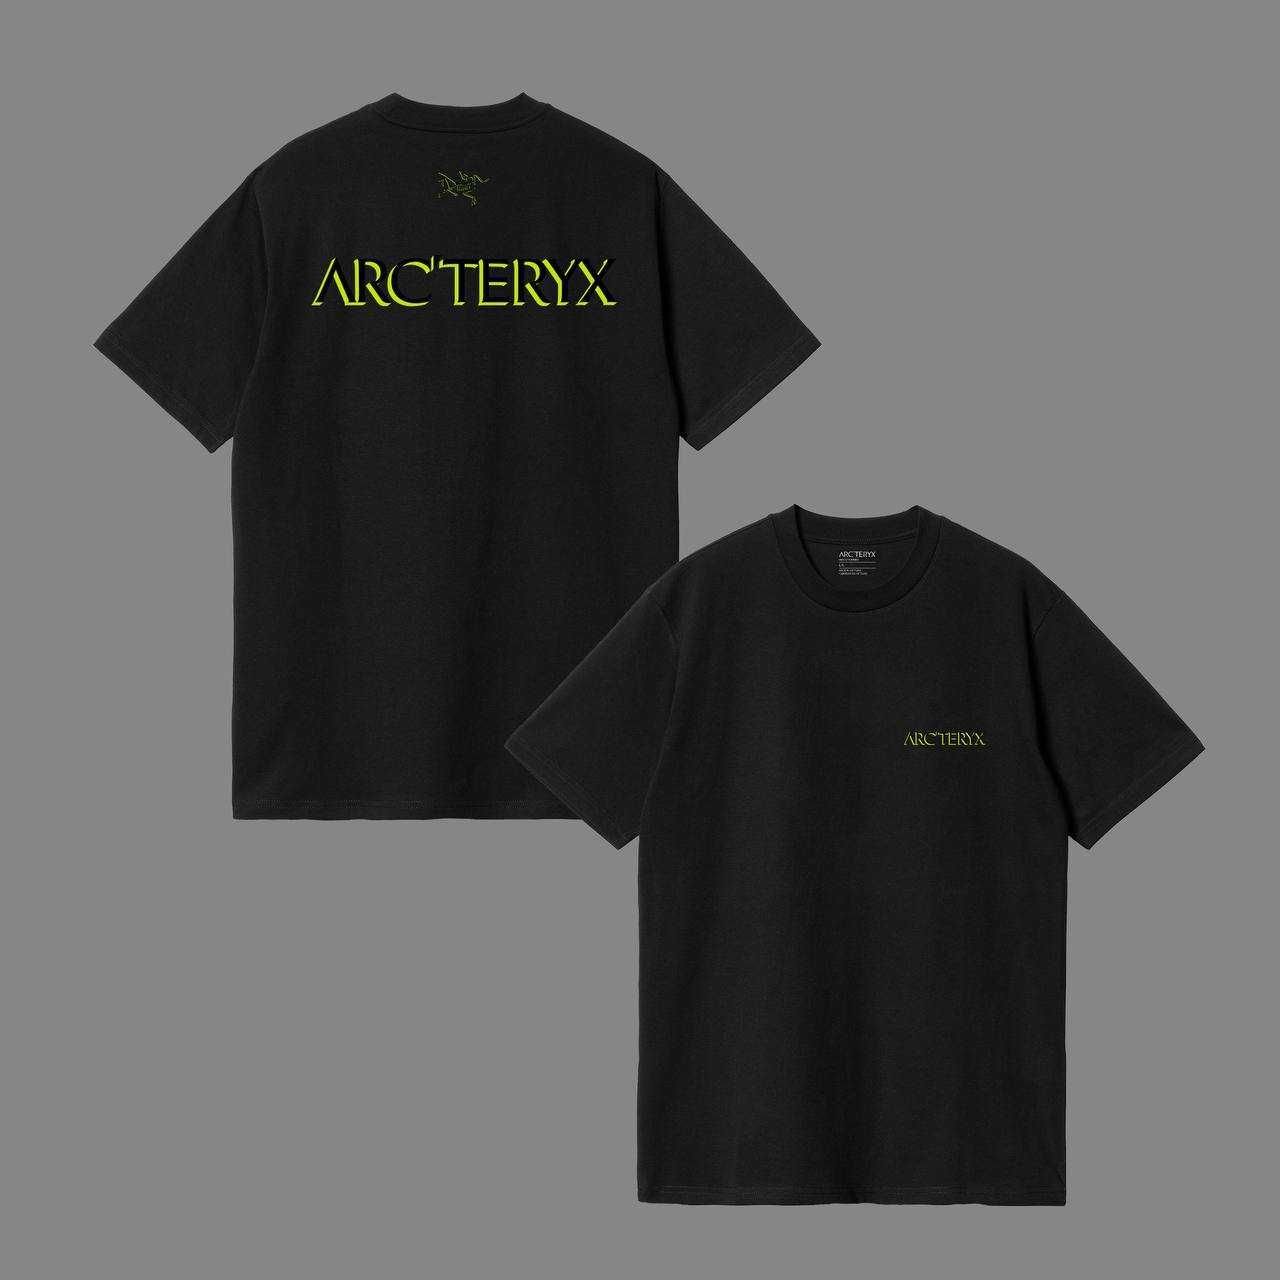 Футболка Arcteryx Original | Футболка Артерикс с бирками(Арктерикс)